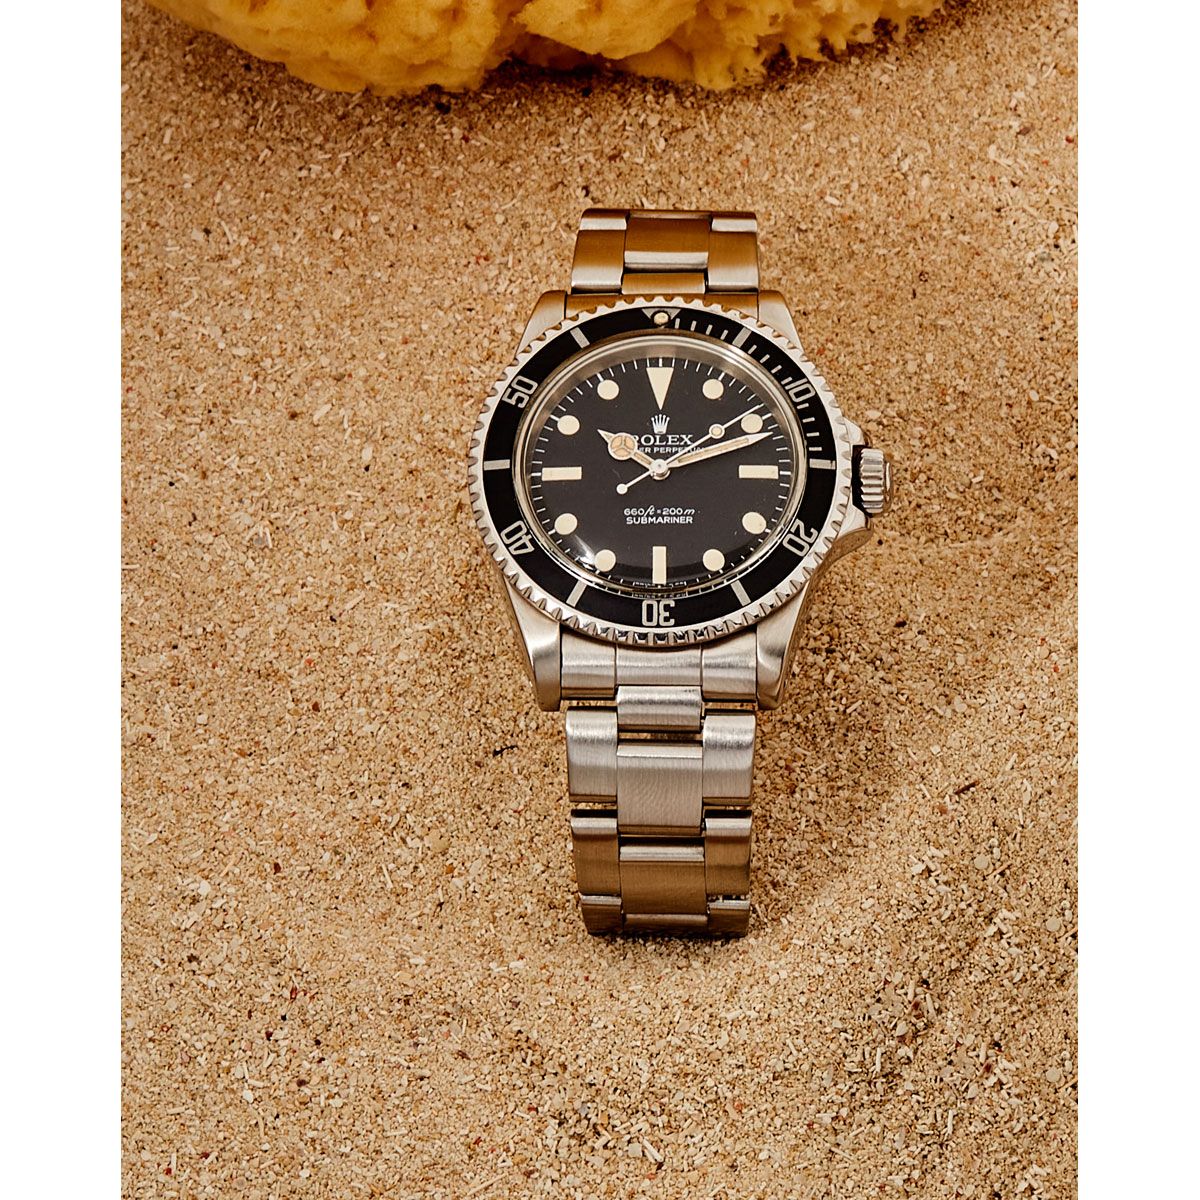 Null Rolex, Submariner, Ref 5513, nº 5150xxxx, circa 1978


Reloj de buceo de ac&hellip;